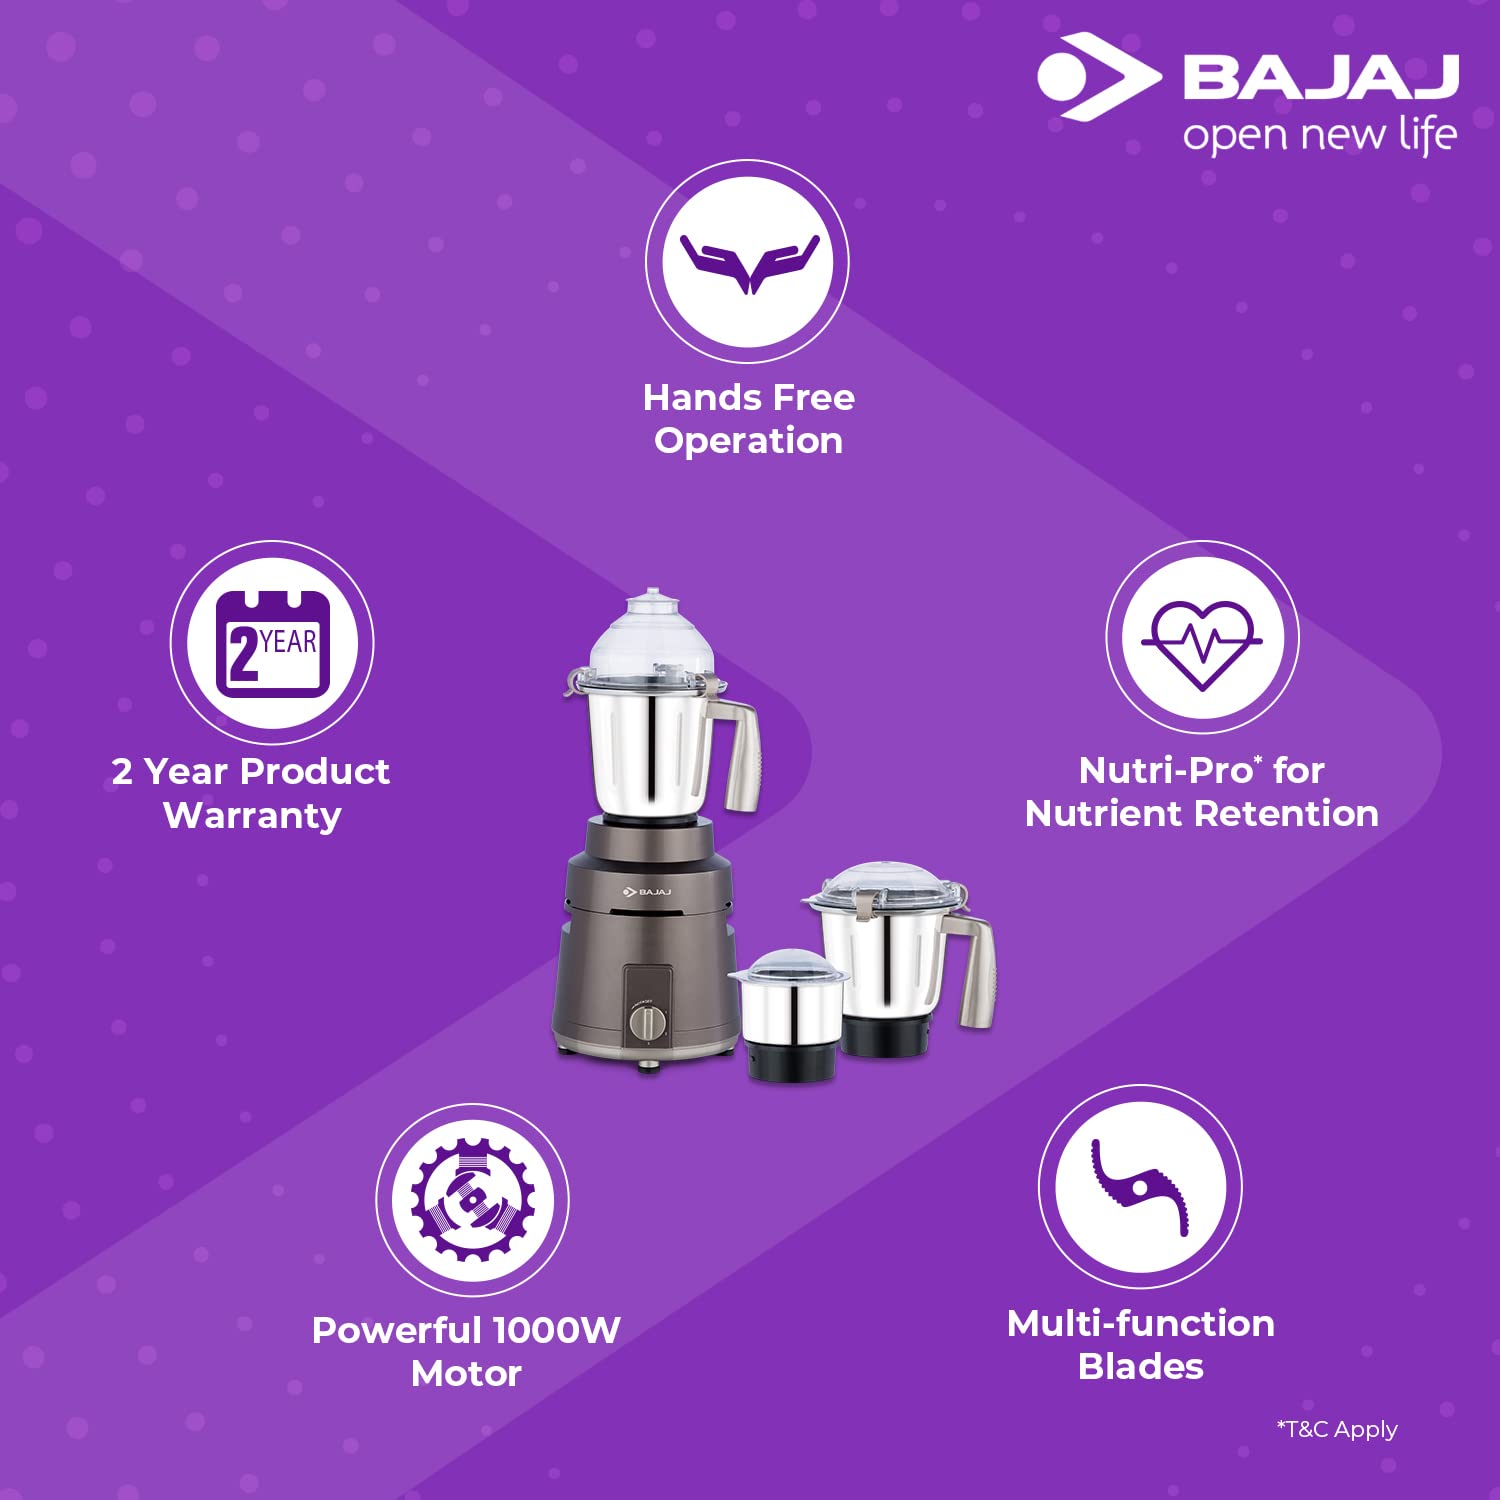 Bajaj Powerful Herculo 1000 Watt Mixer Grinder with 3 Jars - 410540 - 7